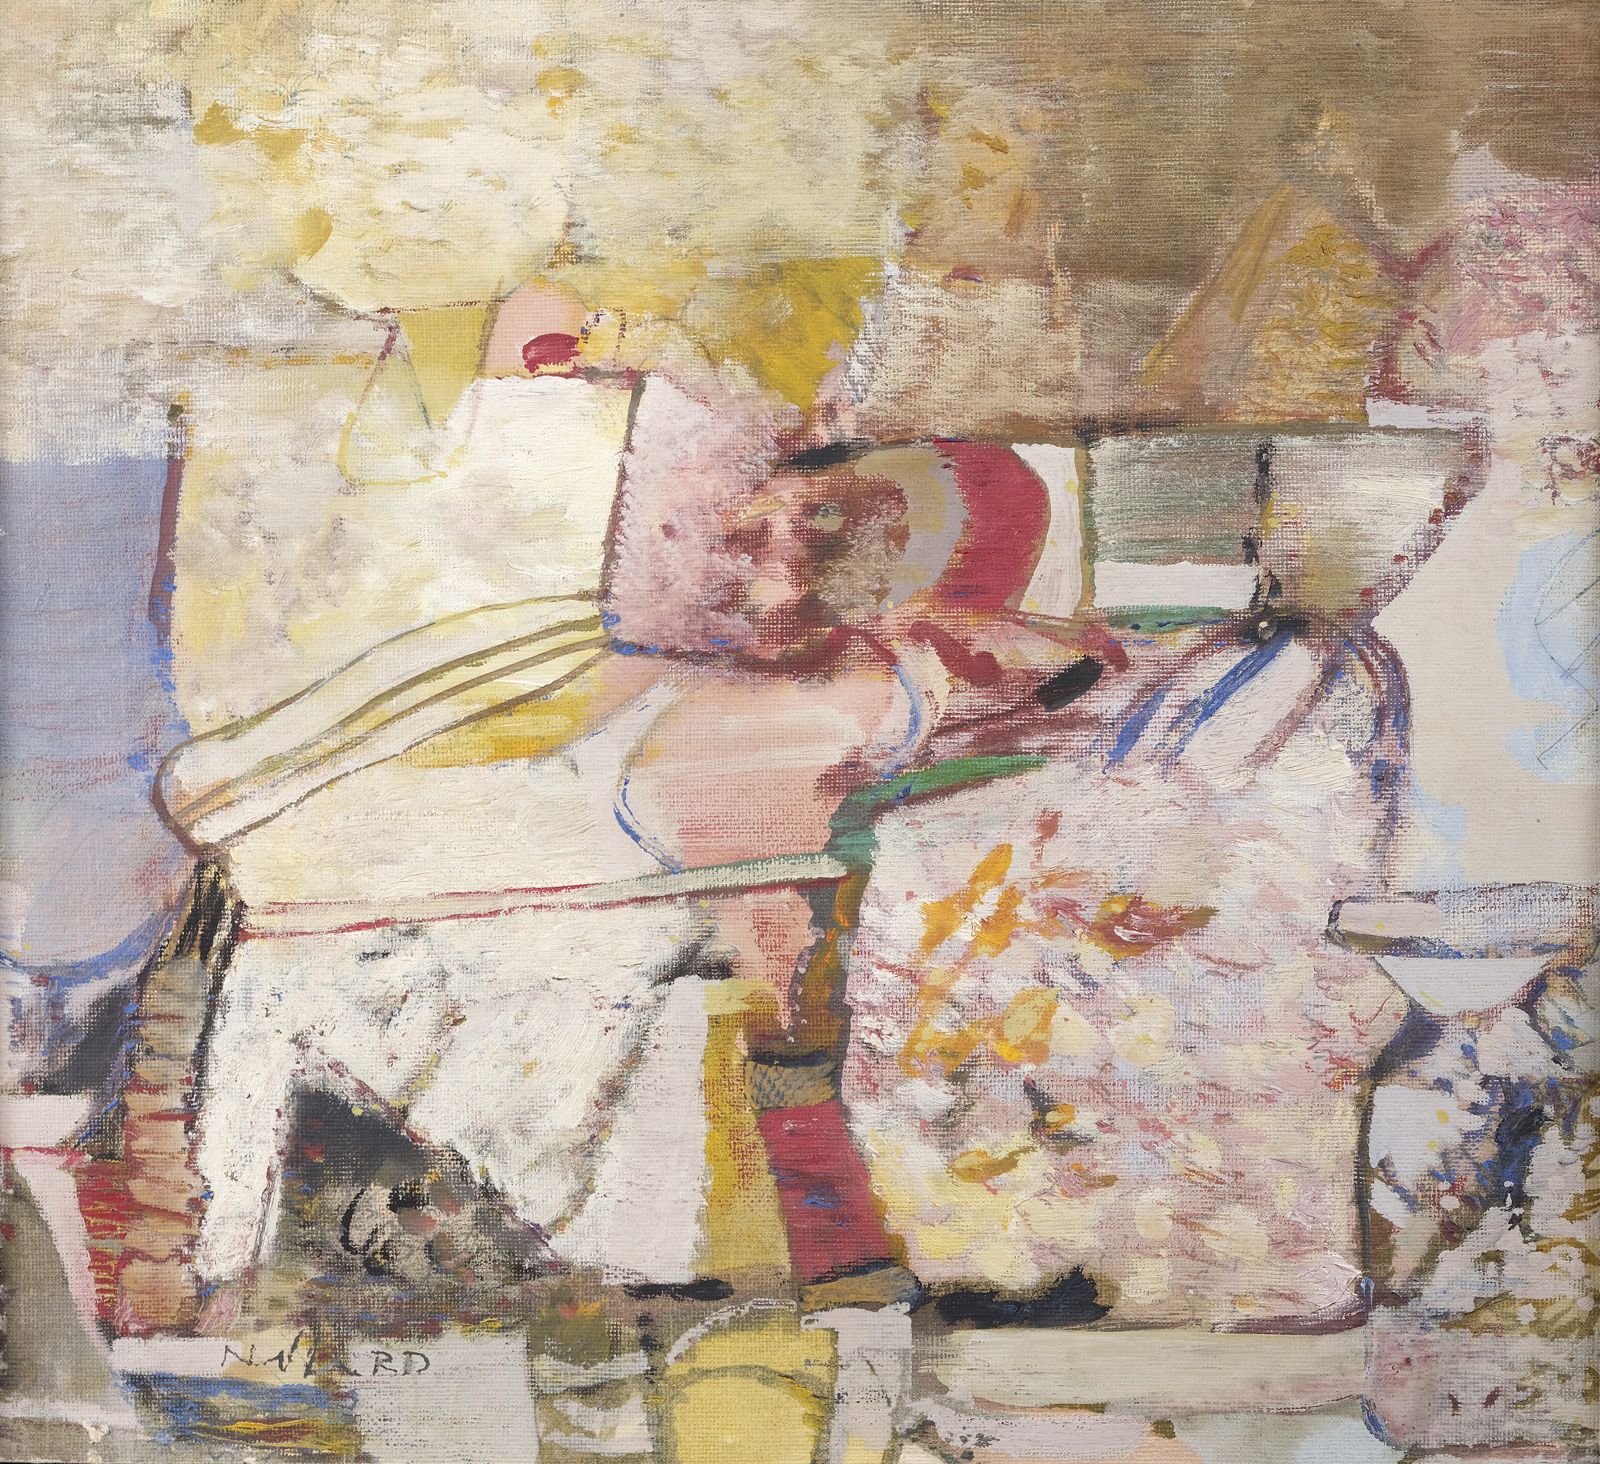 Null 路易斯-纳拉尔(1918-2016)

无题

油画，左下方有签名。

37 x 40.5厘米

证明：阿姆斯特丹Kunsthandel ML de &hellip;